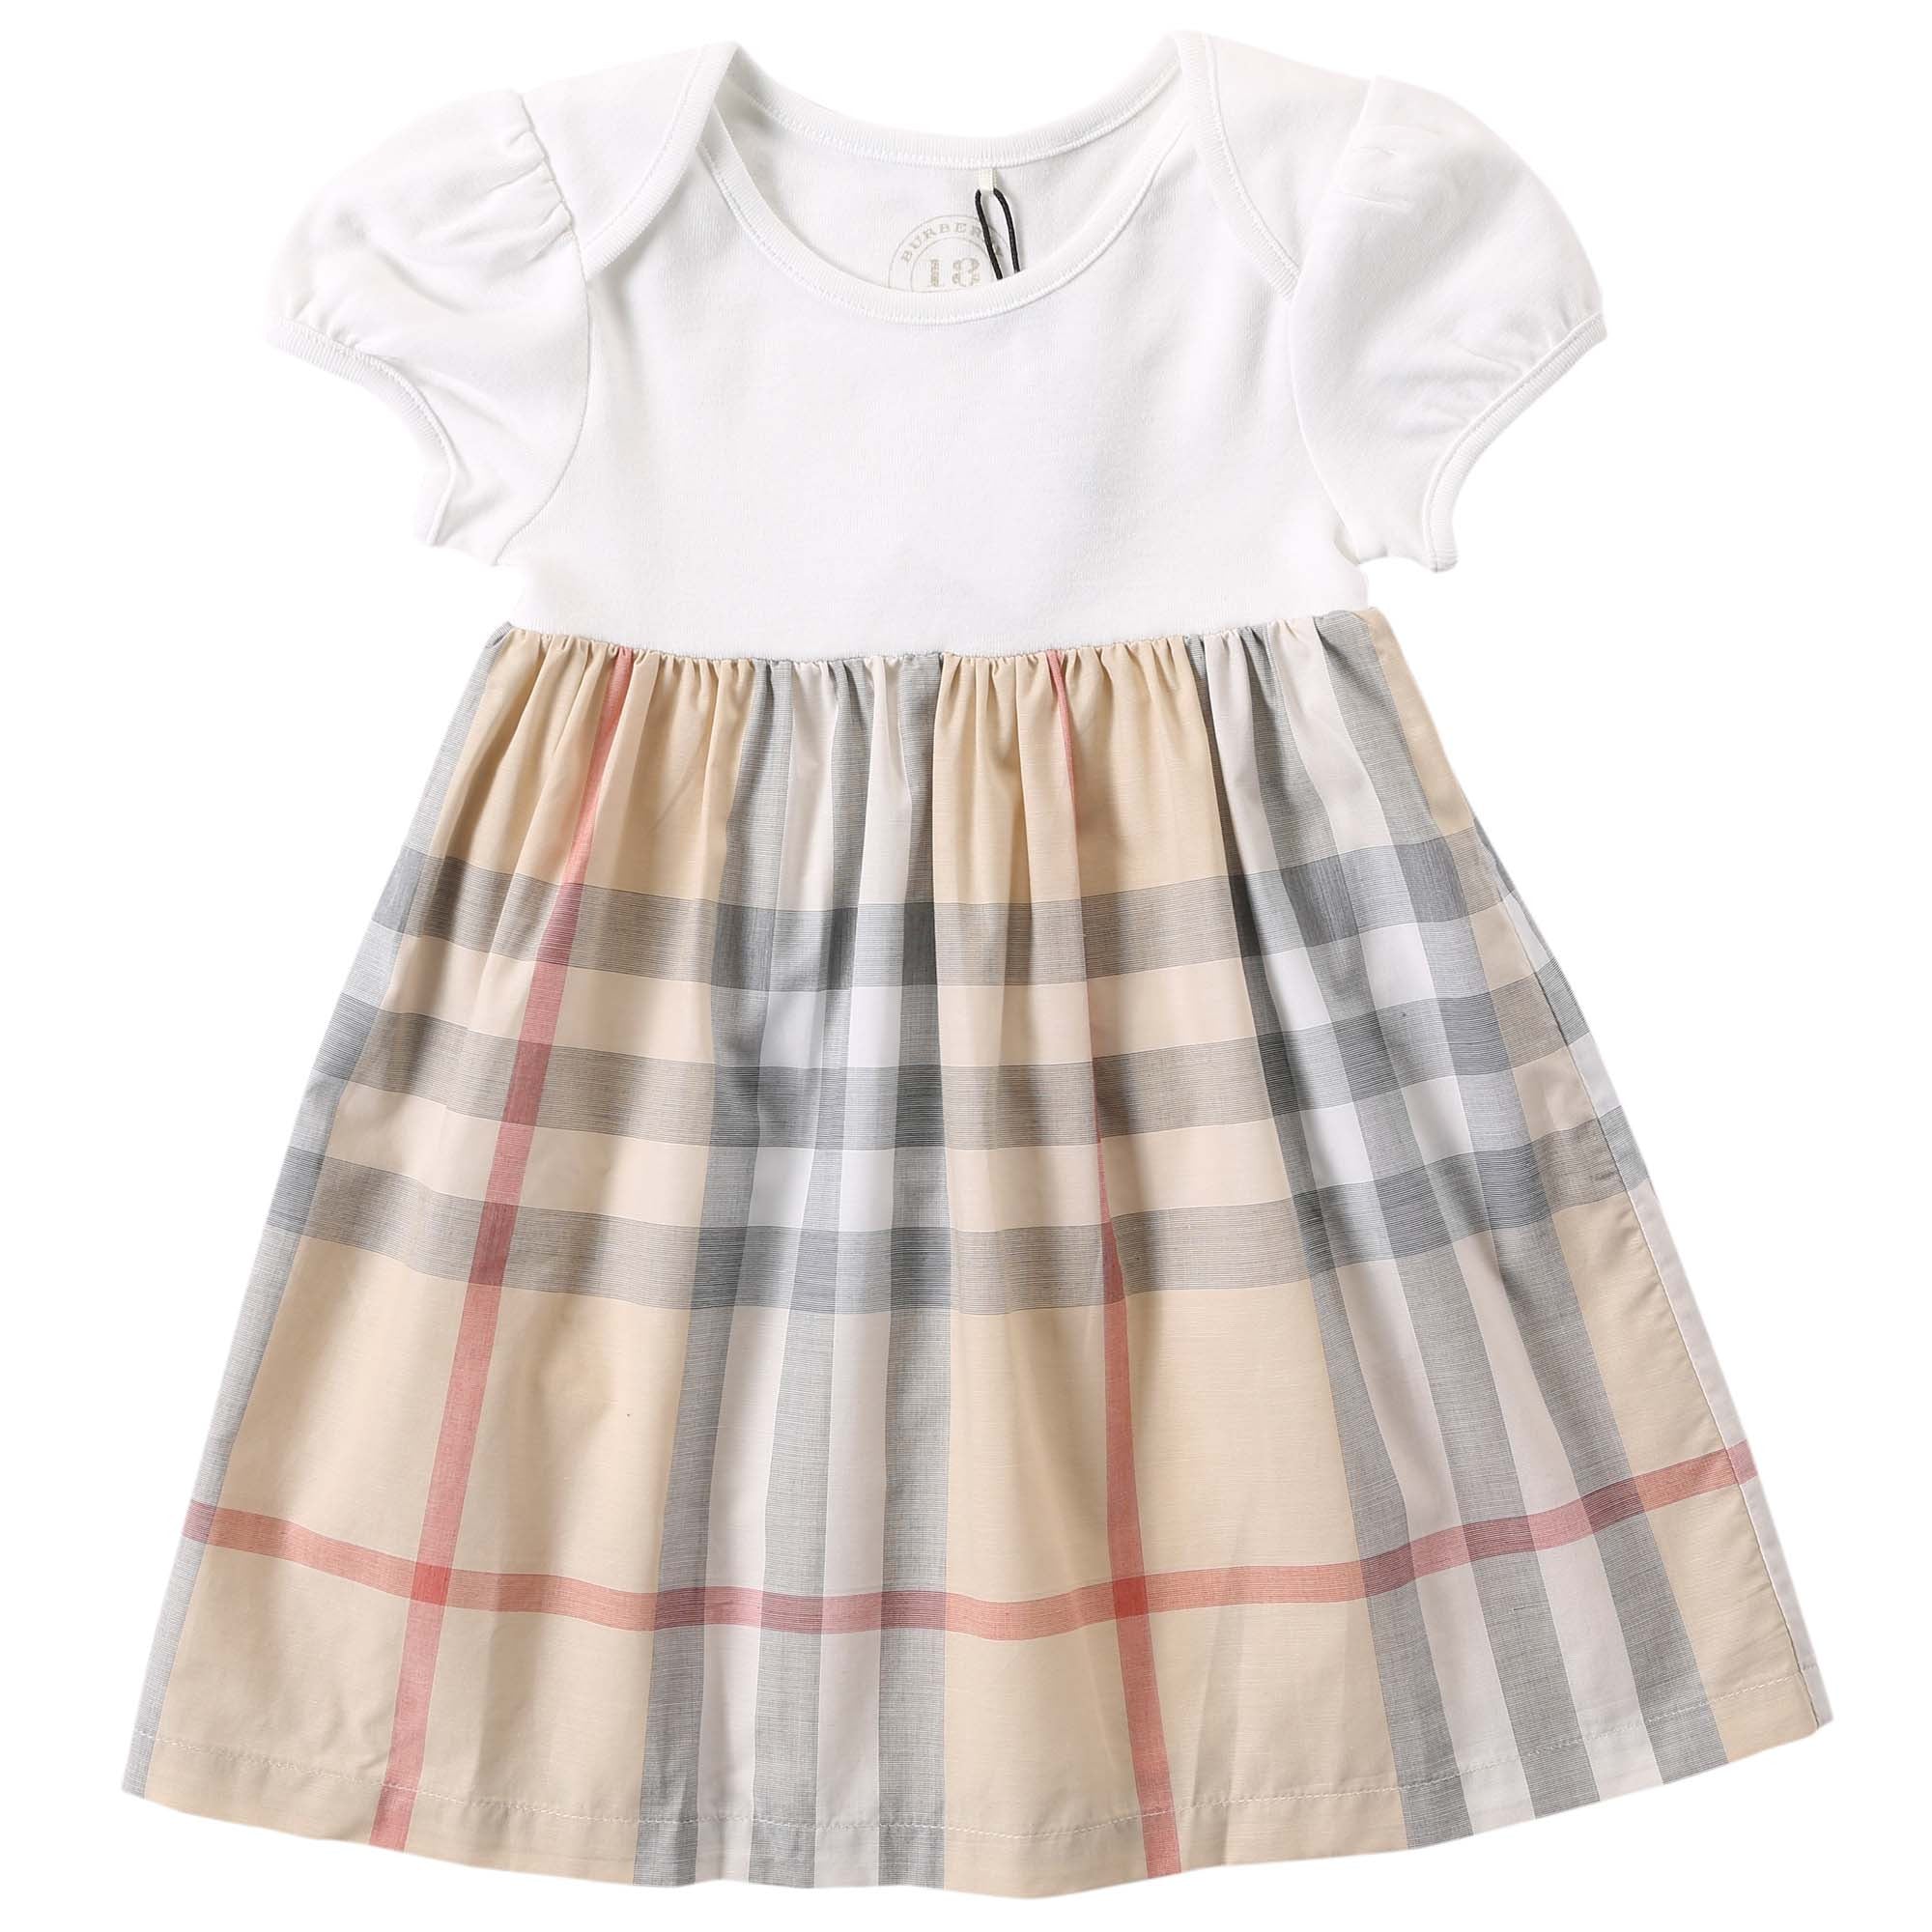 Baby Girls White & Pale Pink Classic Check Dress - CÉMAROSE | Children's Fashion Store - 1